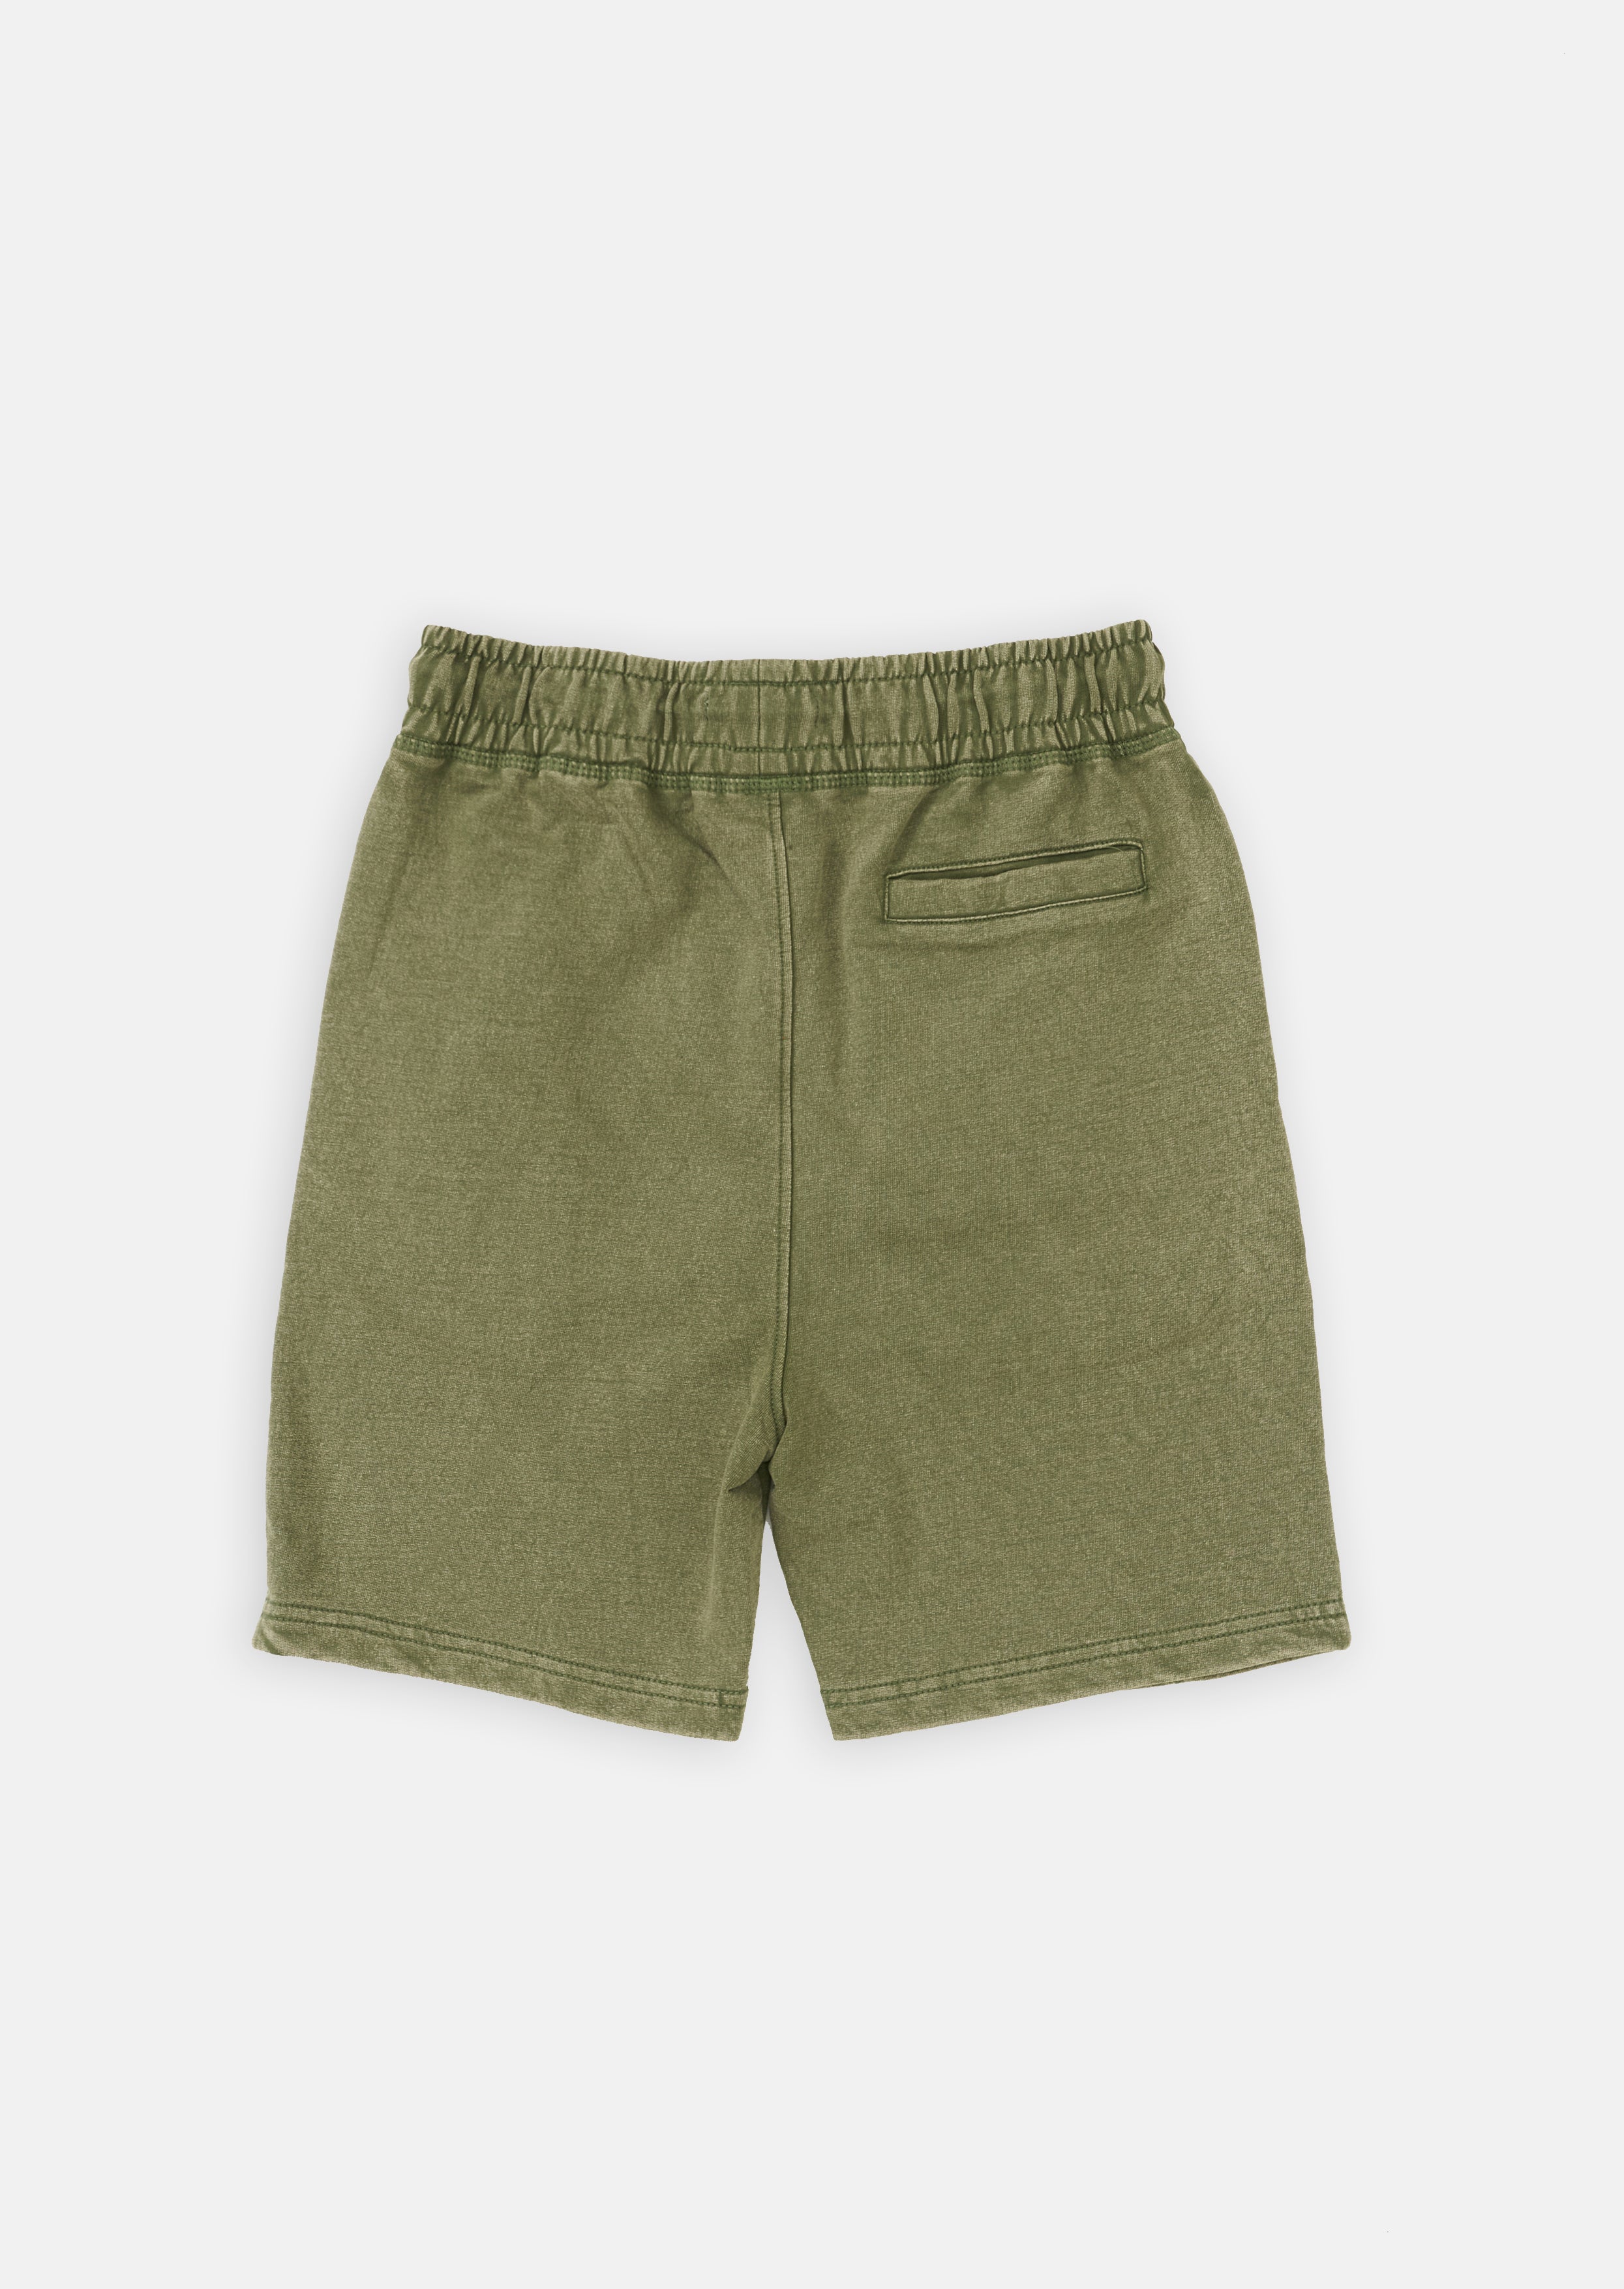 Boys Acid Wash Cotton Green Shorts